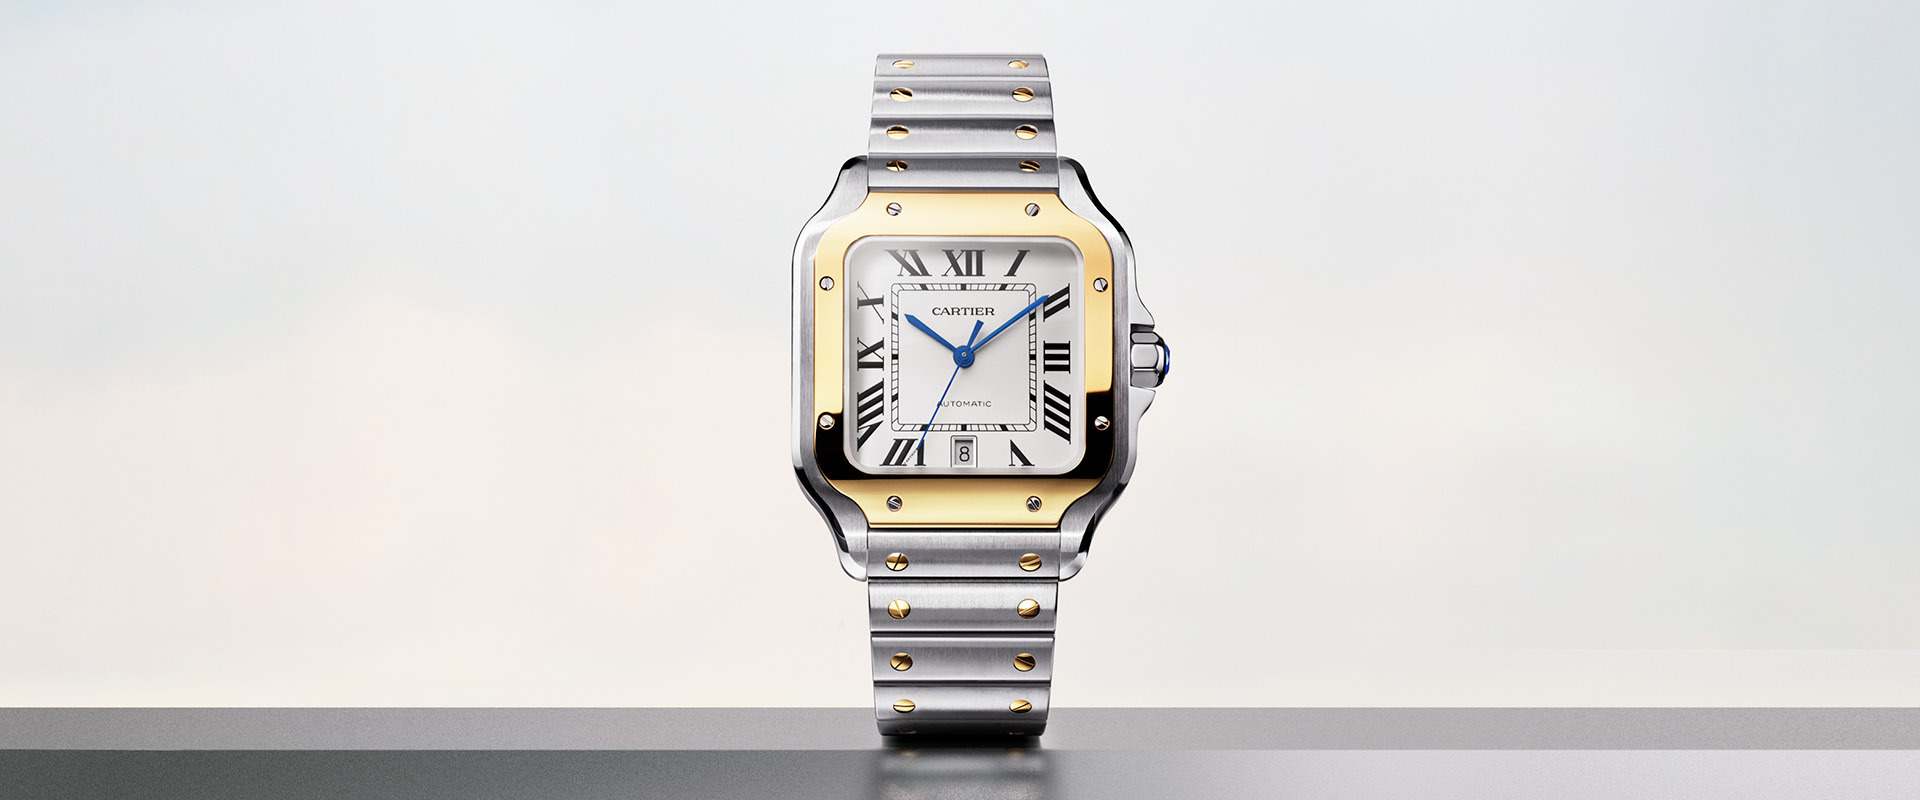 Santos de Cartier watch on a silver background